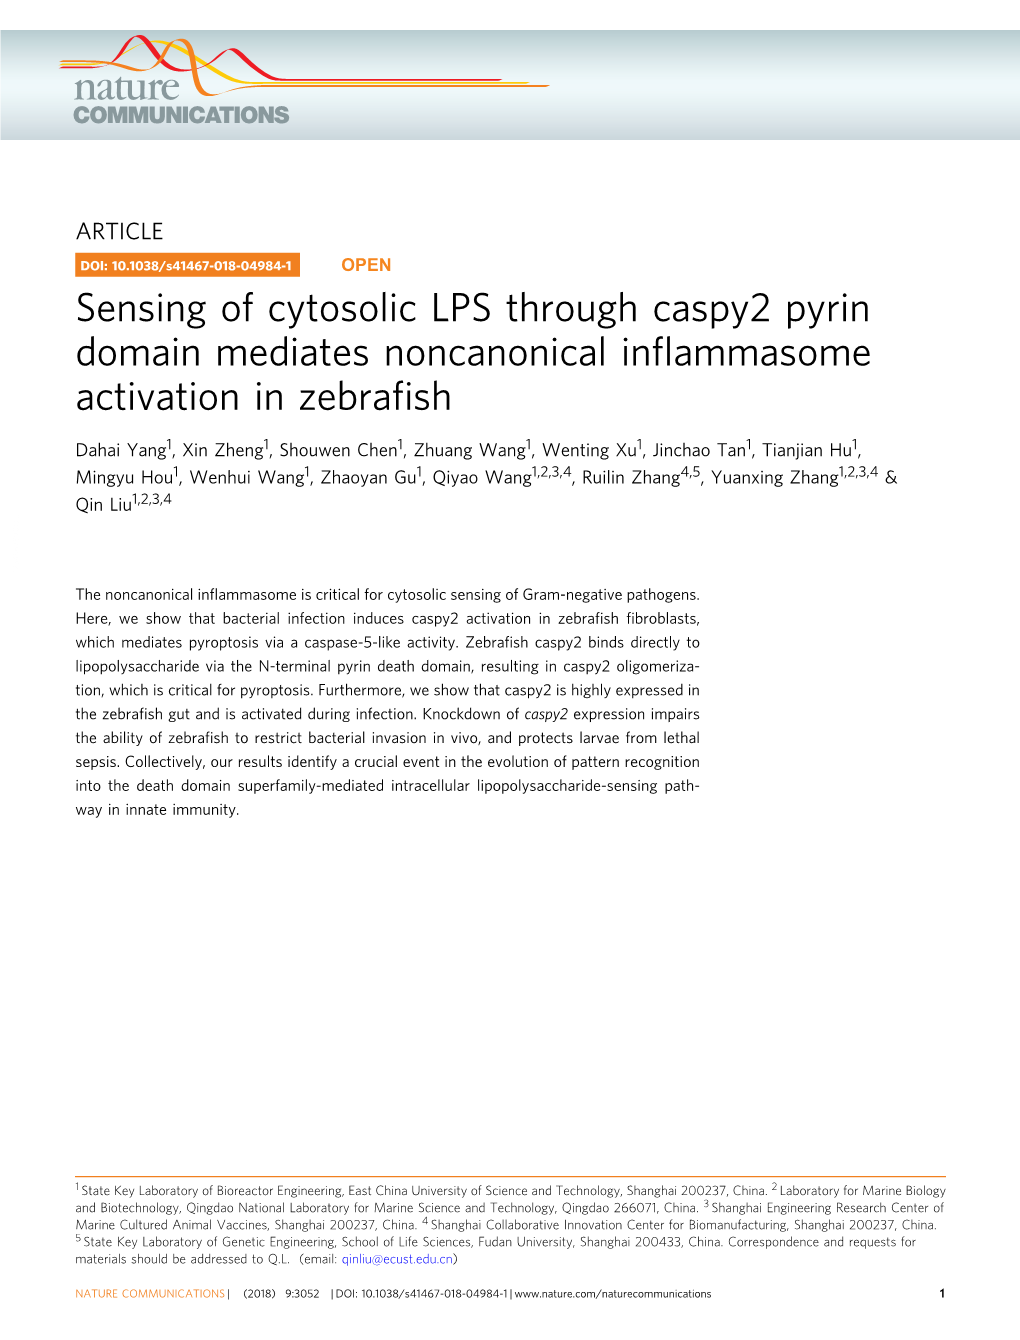 Sensing of Cytosolic LPS Through Caspy2 Pyrin Domain Mediates Noncanonical Inﬂammasome Activation in Zebraﬁsh